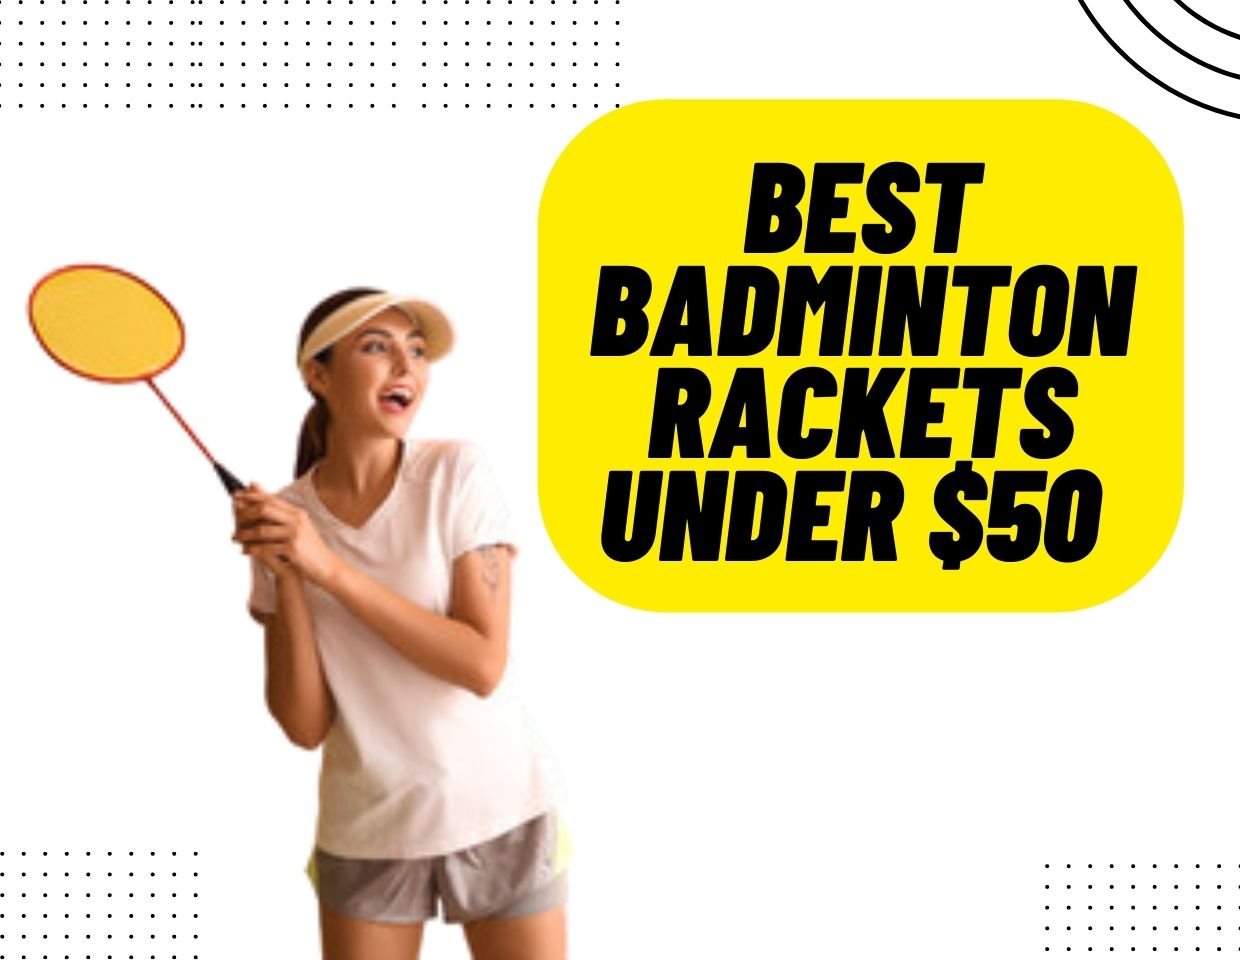 Best Badminton Rackets under $50